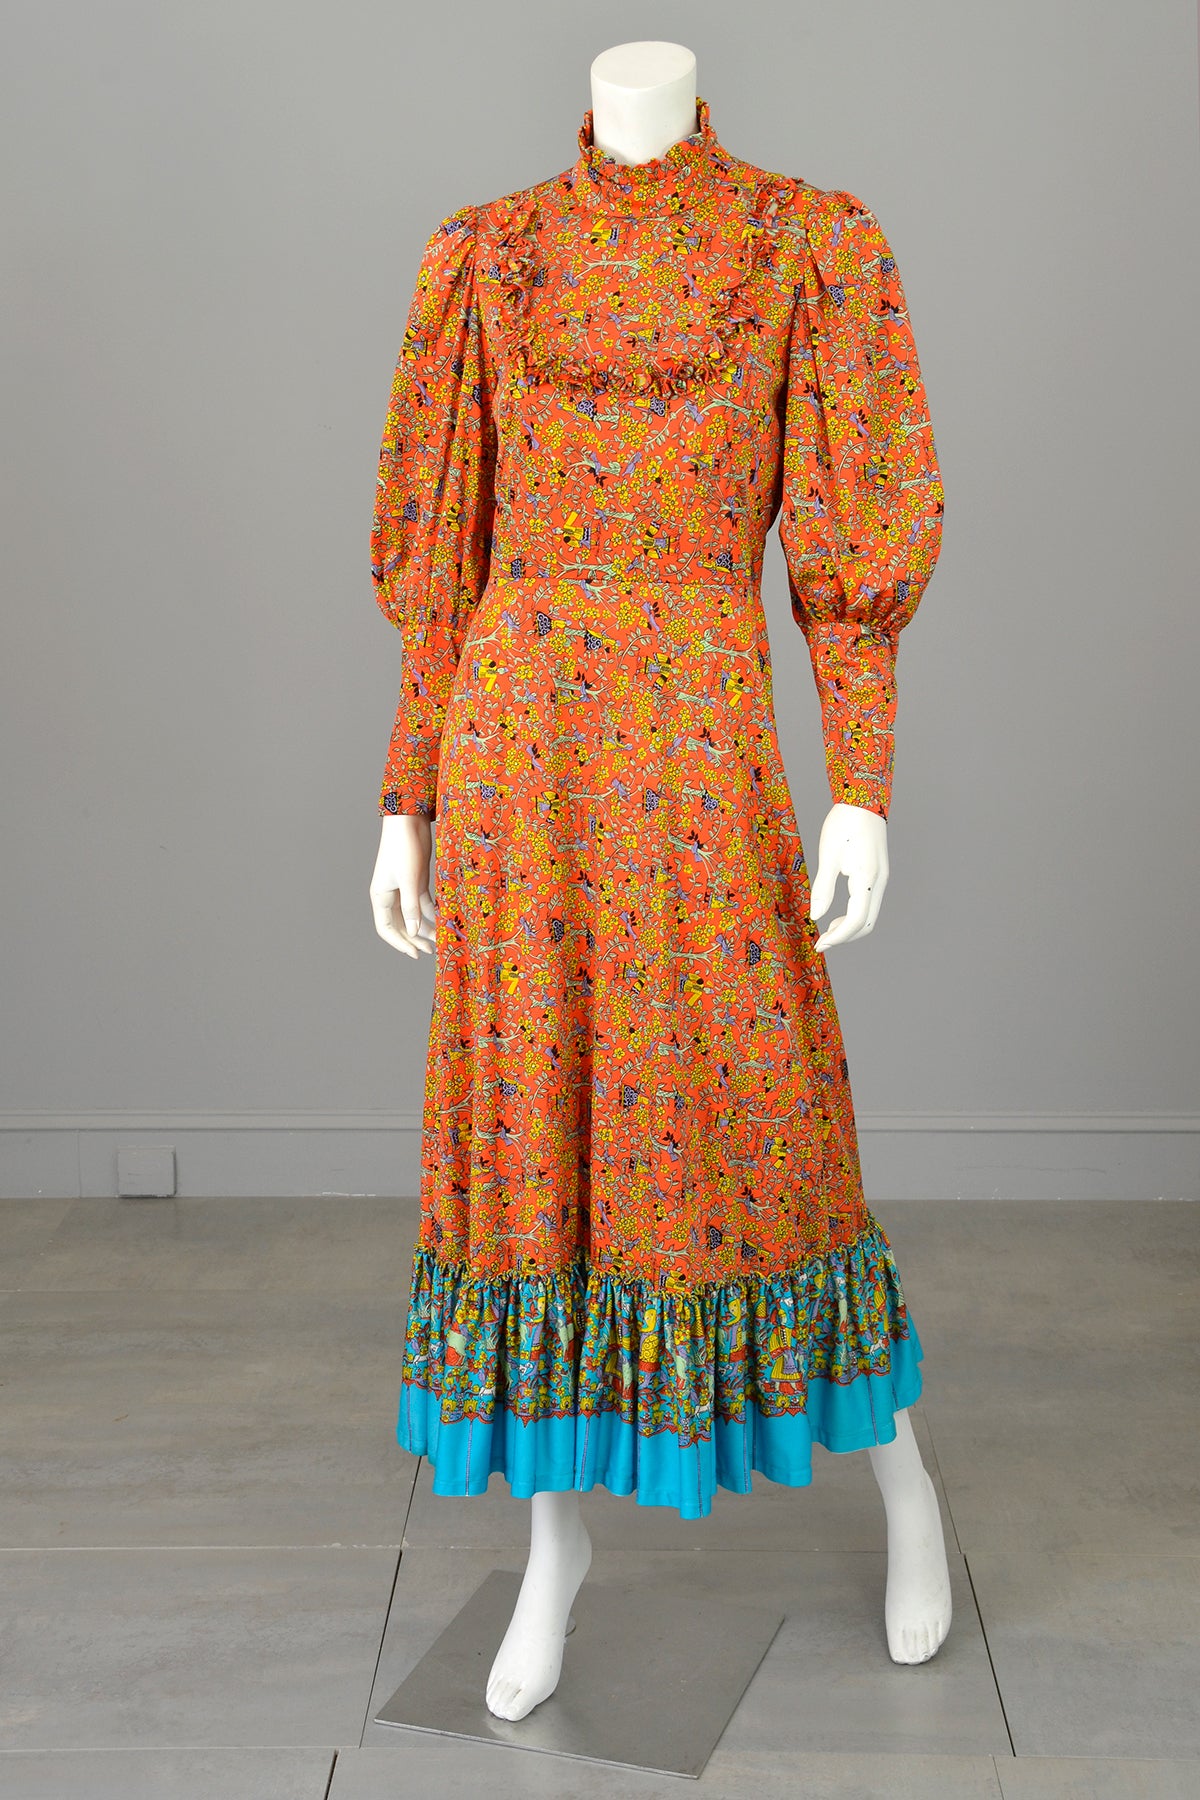 1970s dress